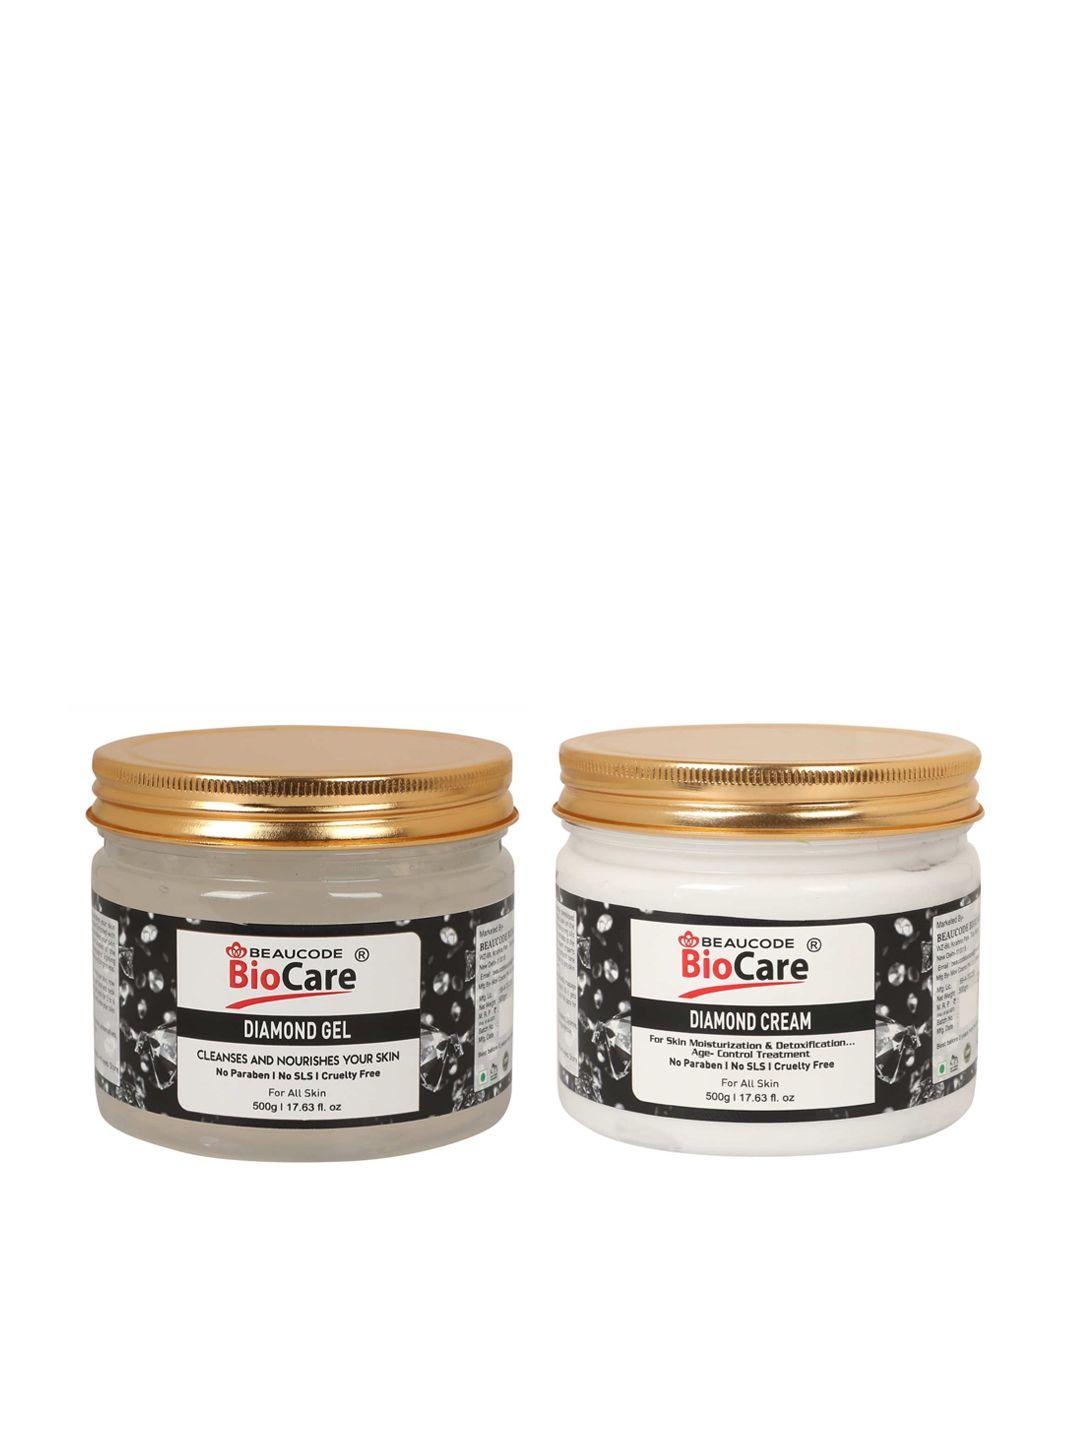 beaucode biocare set of diamond face & body gel & cream - 500 g each